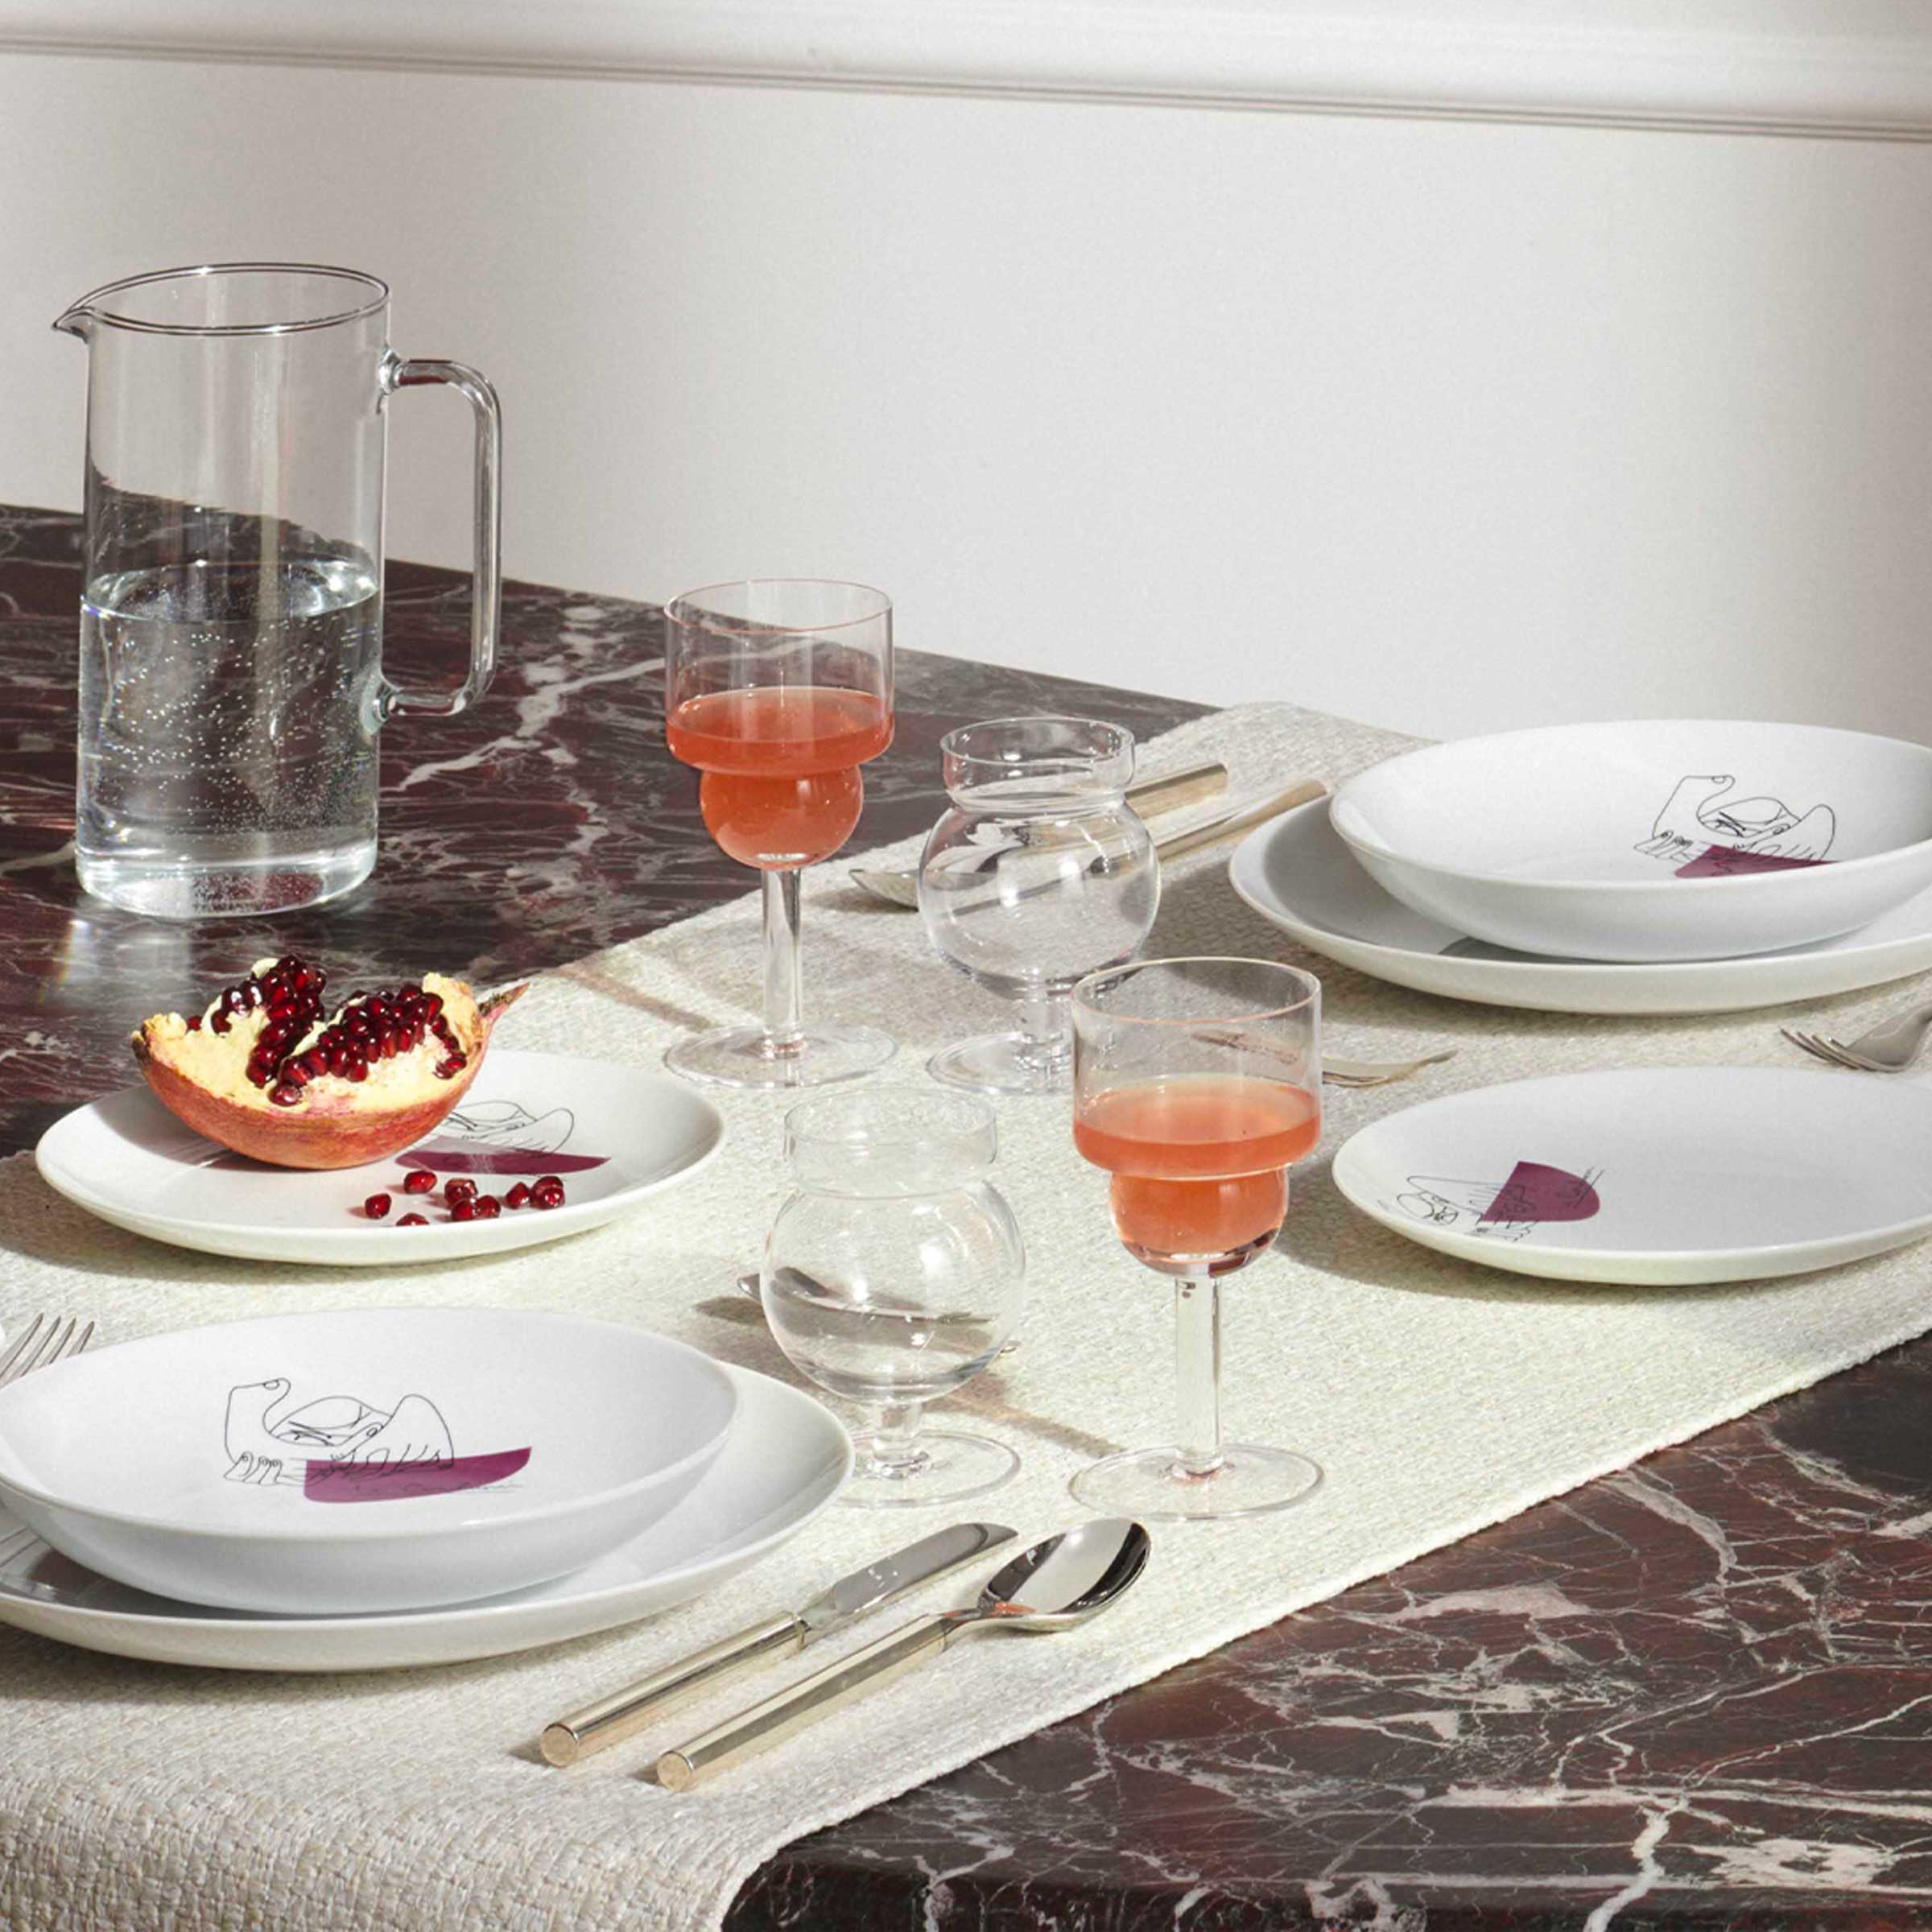 Cassina Designer Tableware Sets - Design Italy